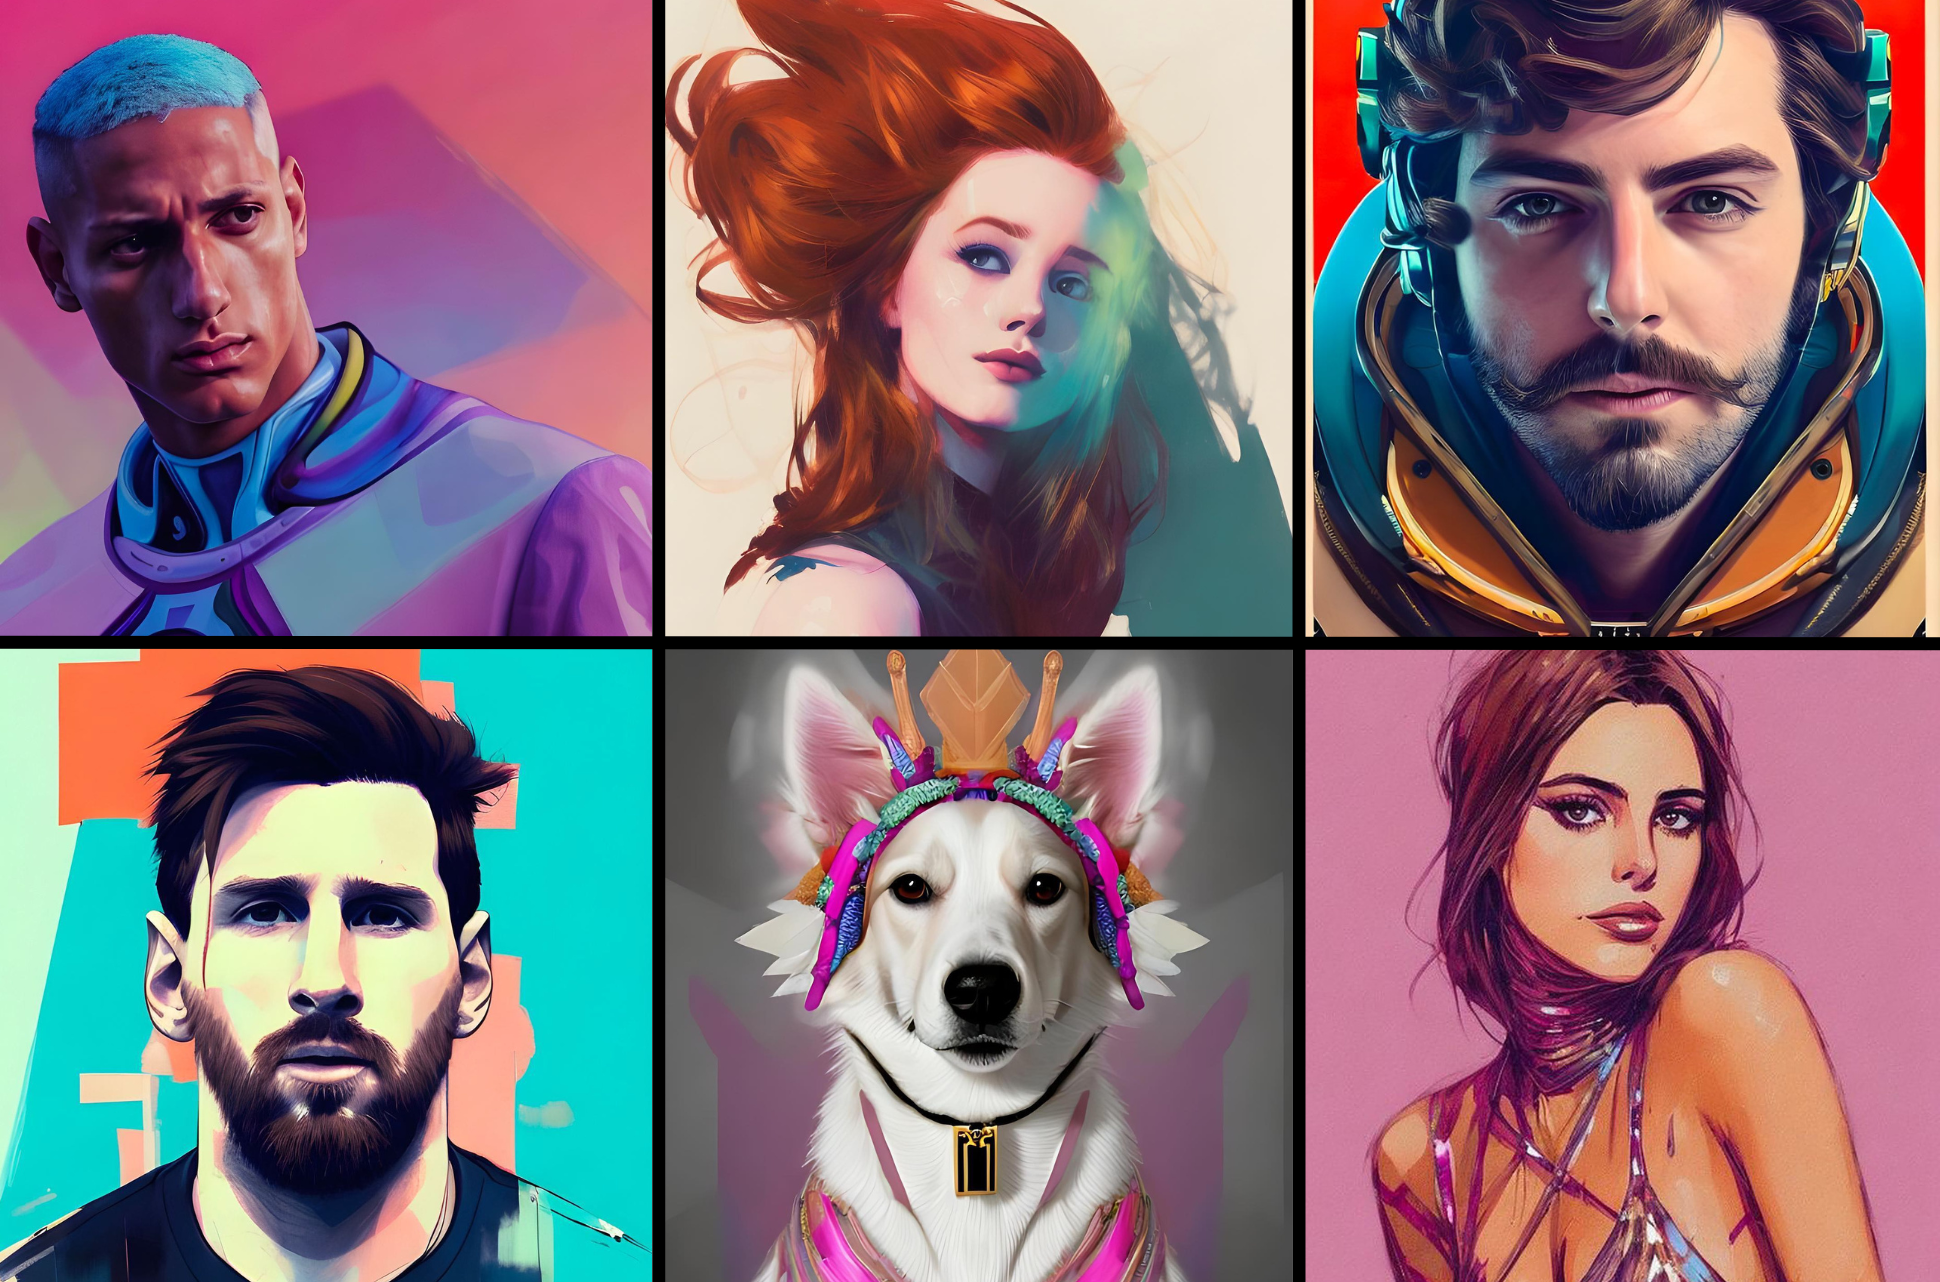 Examples of Lensa app's magical avatars